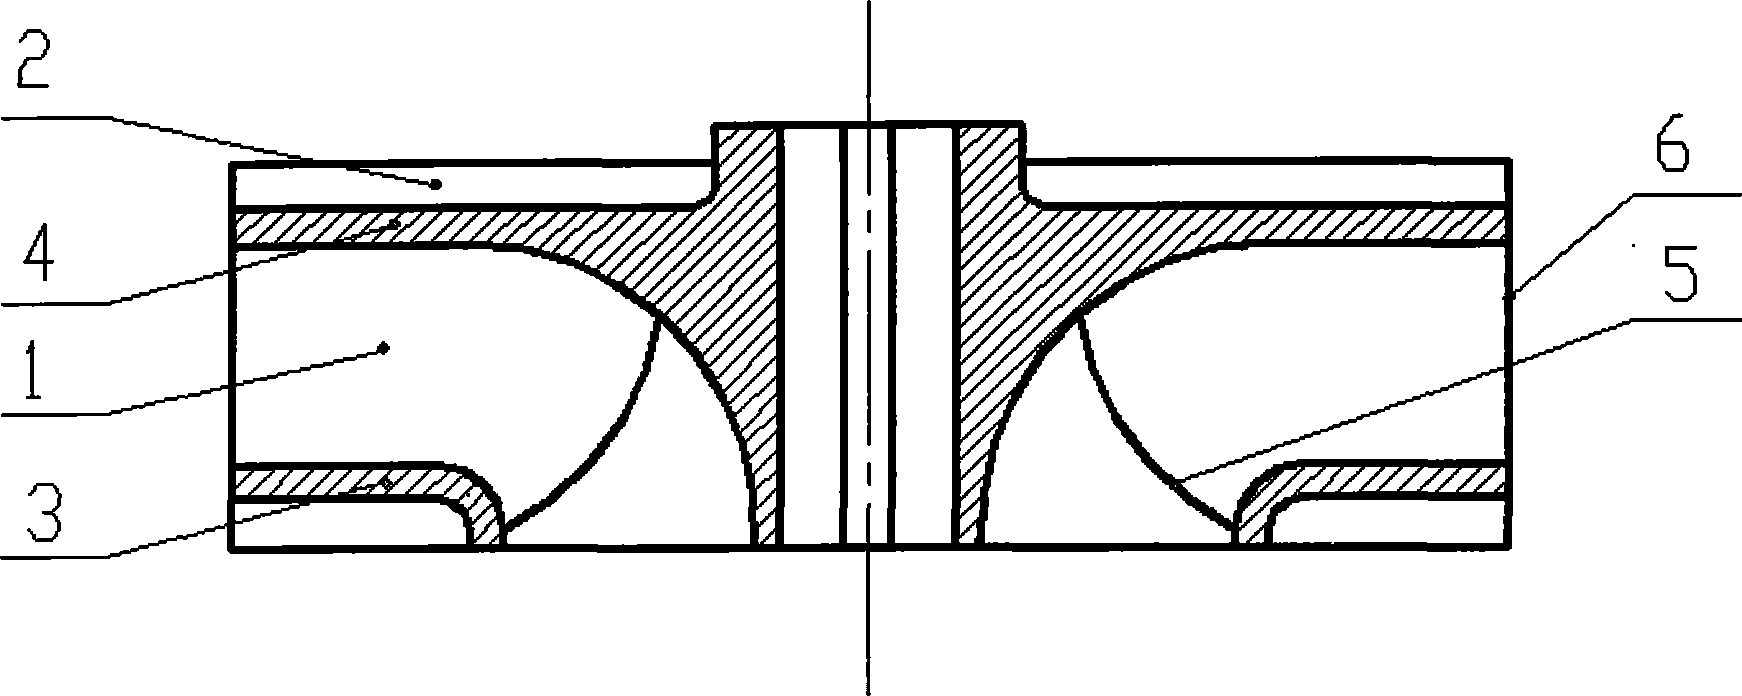 Design method of two phase flow pump impeller